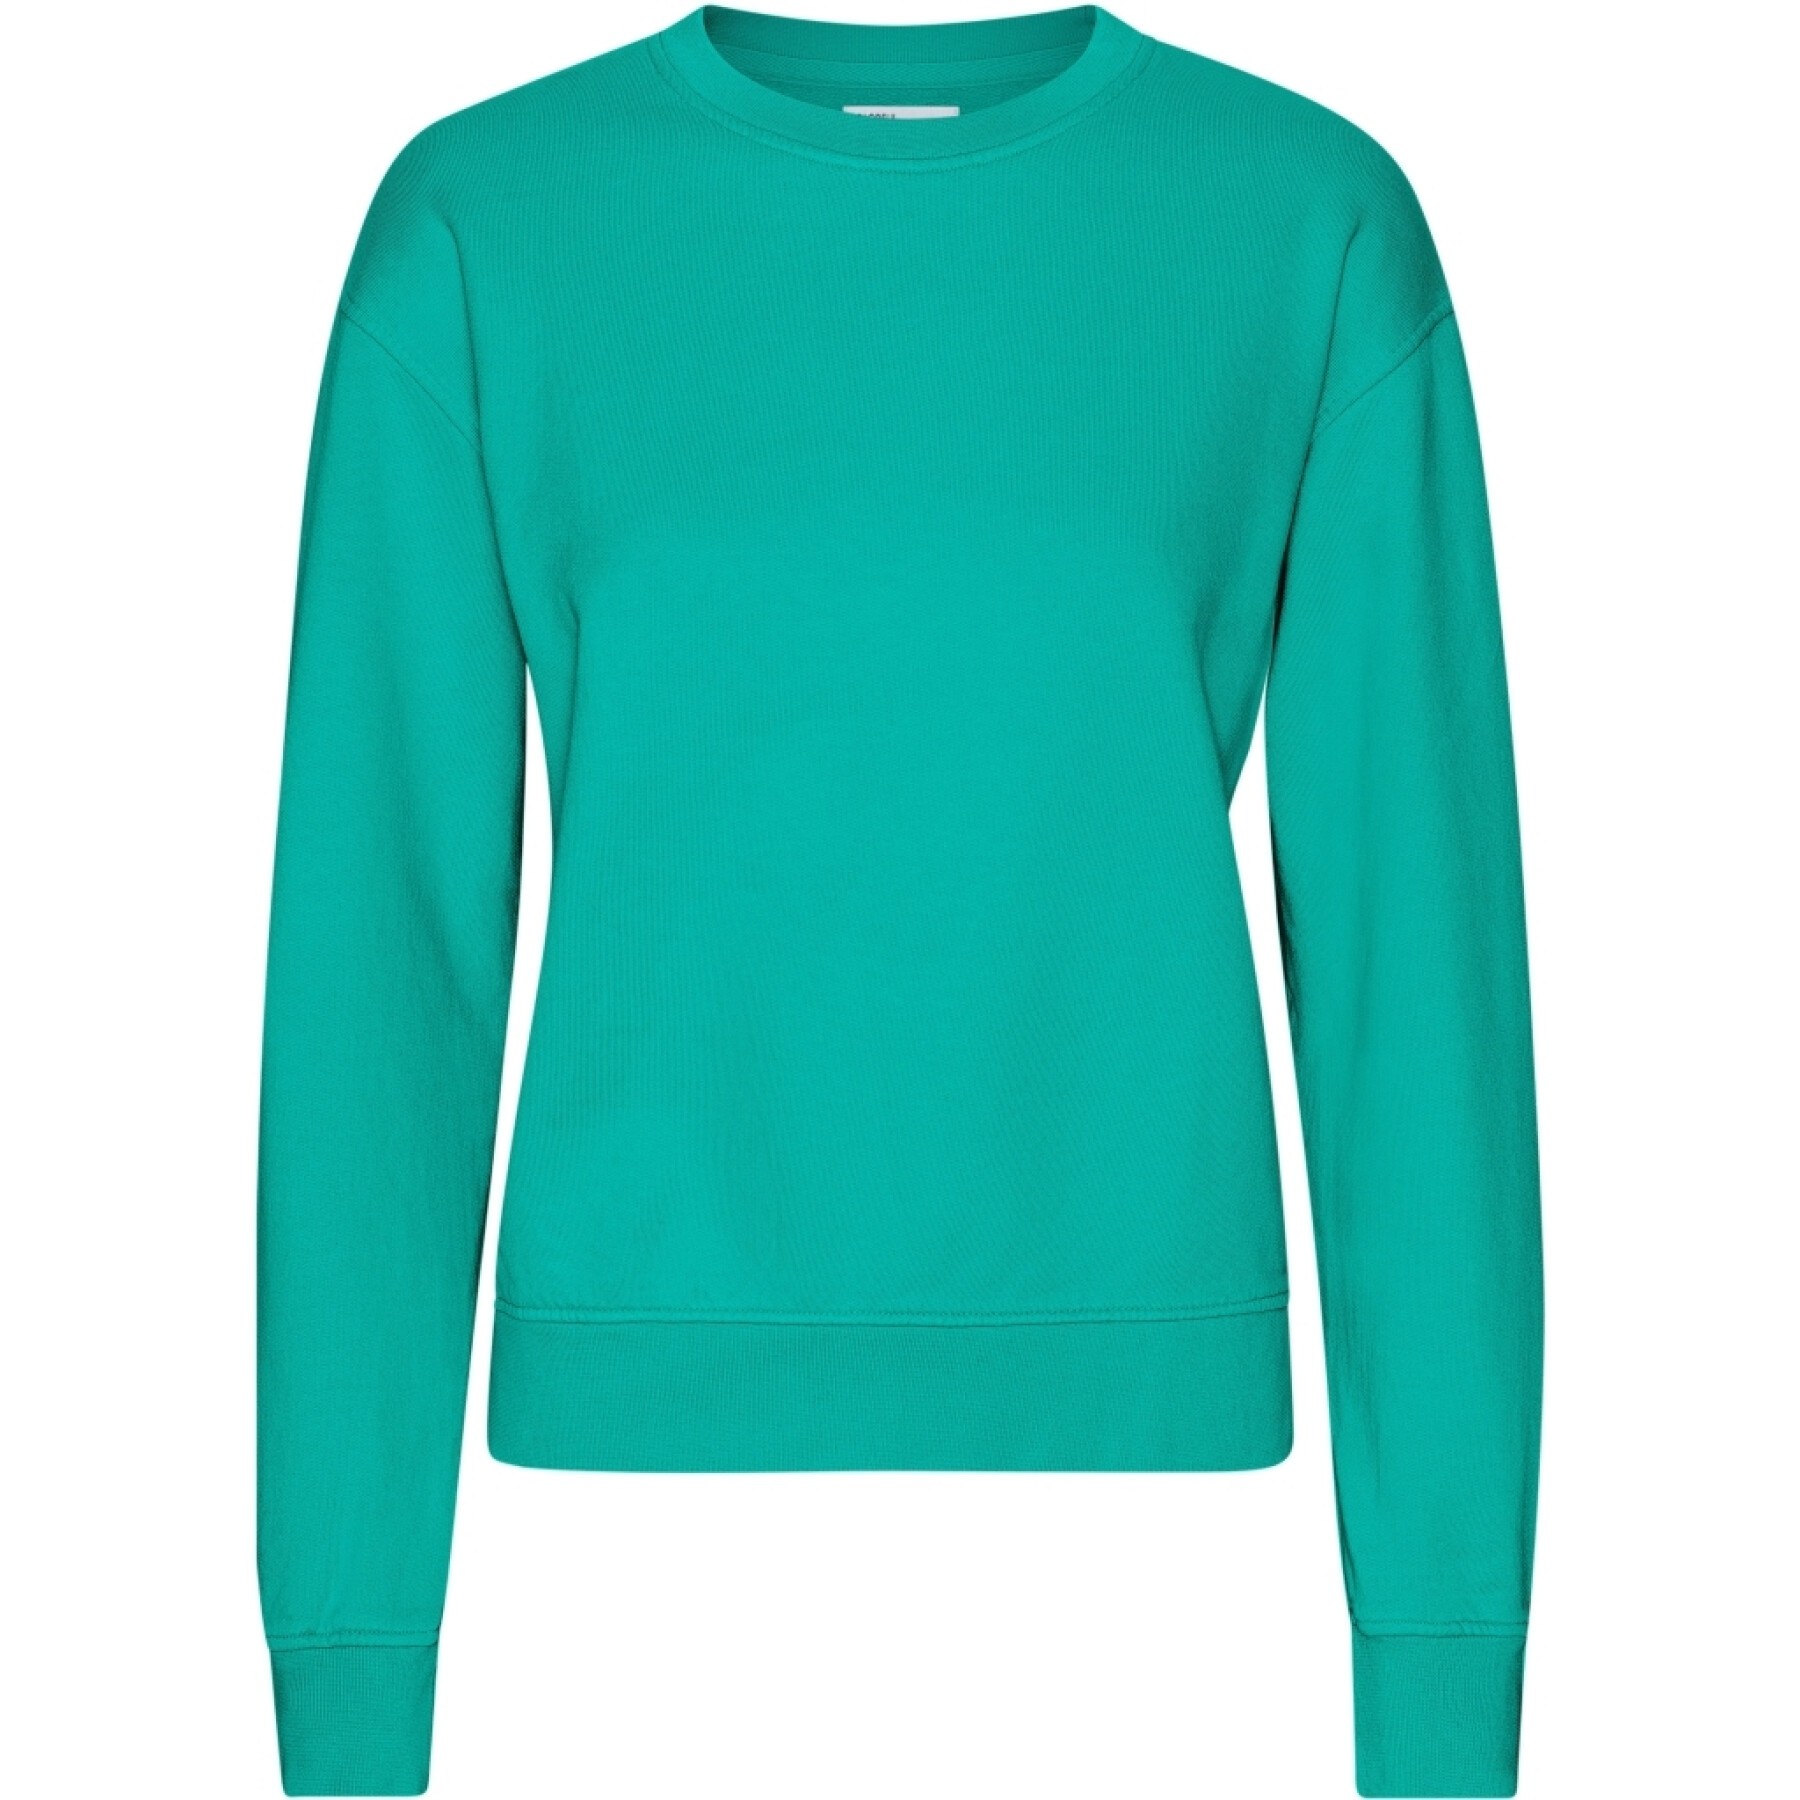 Sweatshirt mit Rundhalsausschnitt, Damen Colorful Standard Classic Organic Tropical Sea